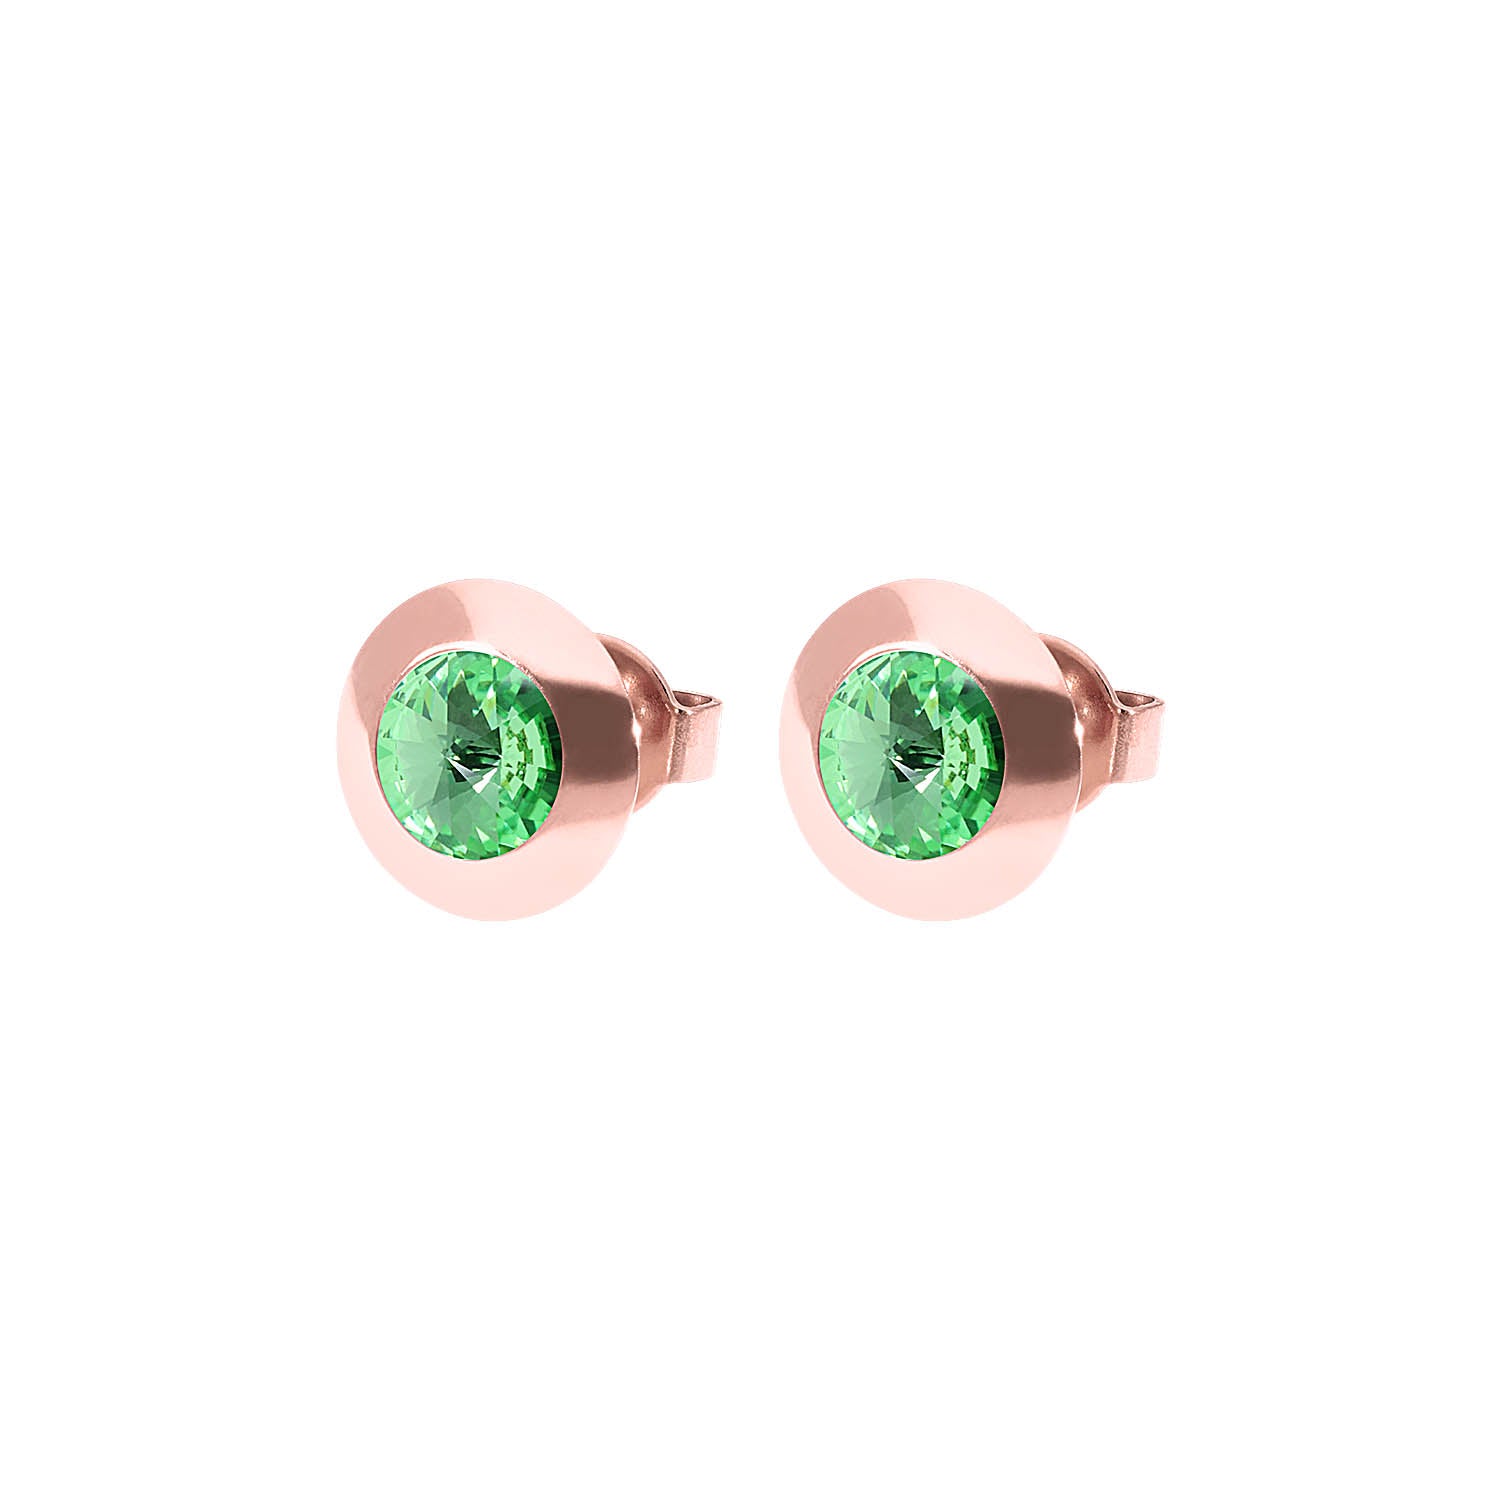 Tondo Stud Earring 0.35" - Rose Gold